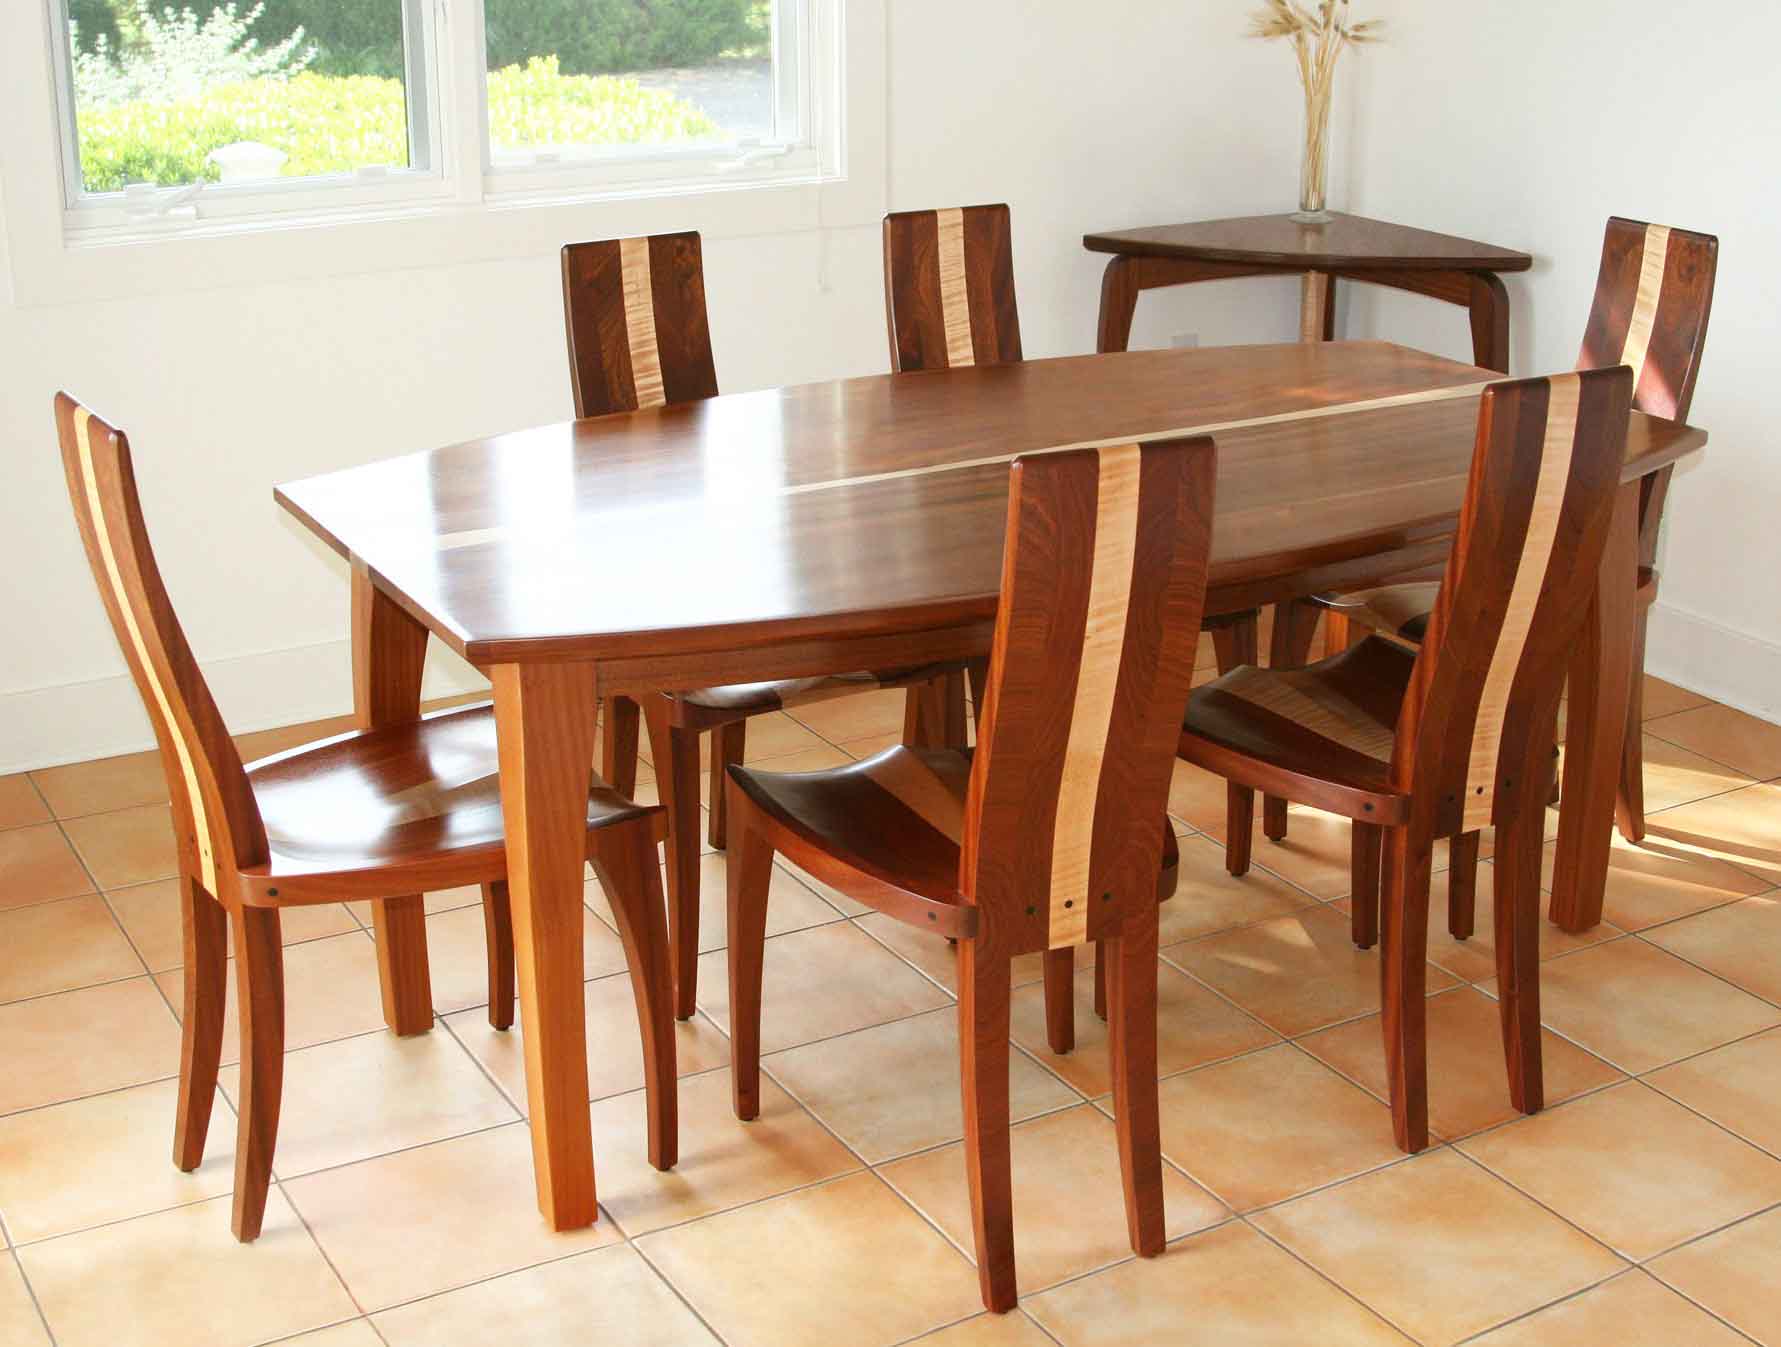 Wood Dining Table For Sale in Kampala Uganda. Furniture And Wood Products Manufacturer, Erimu Company Ltd Uganda, Ugabox